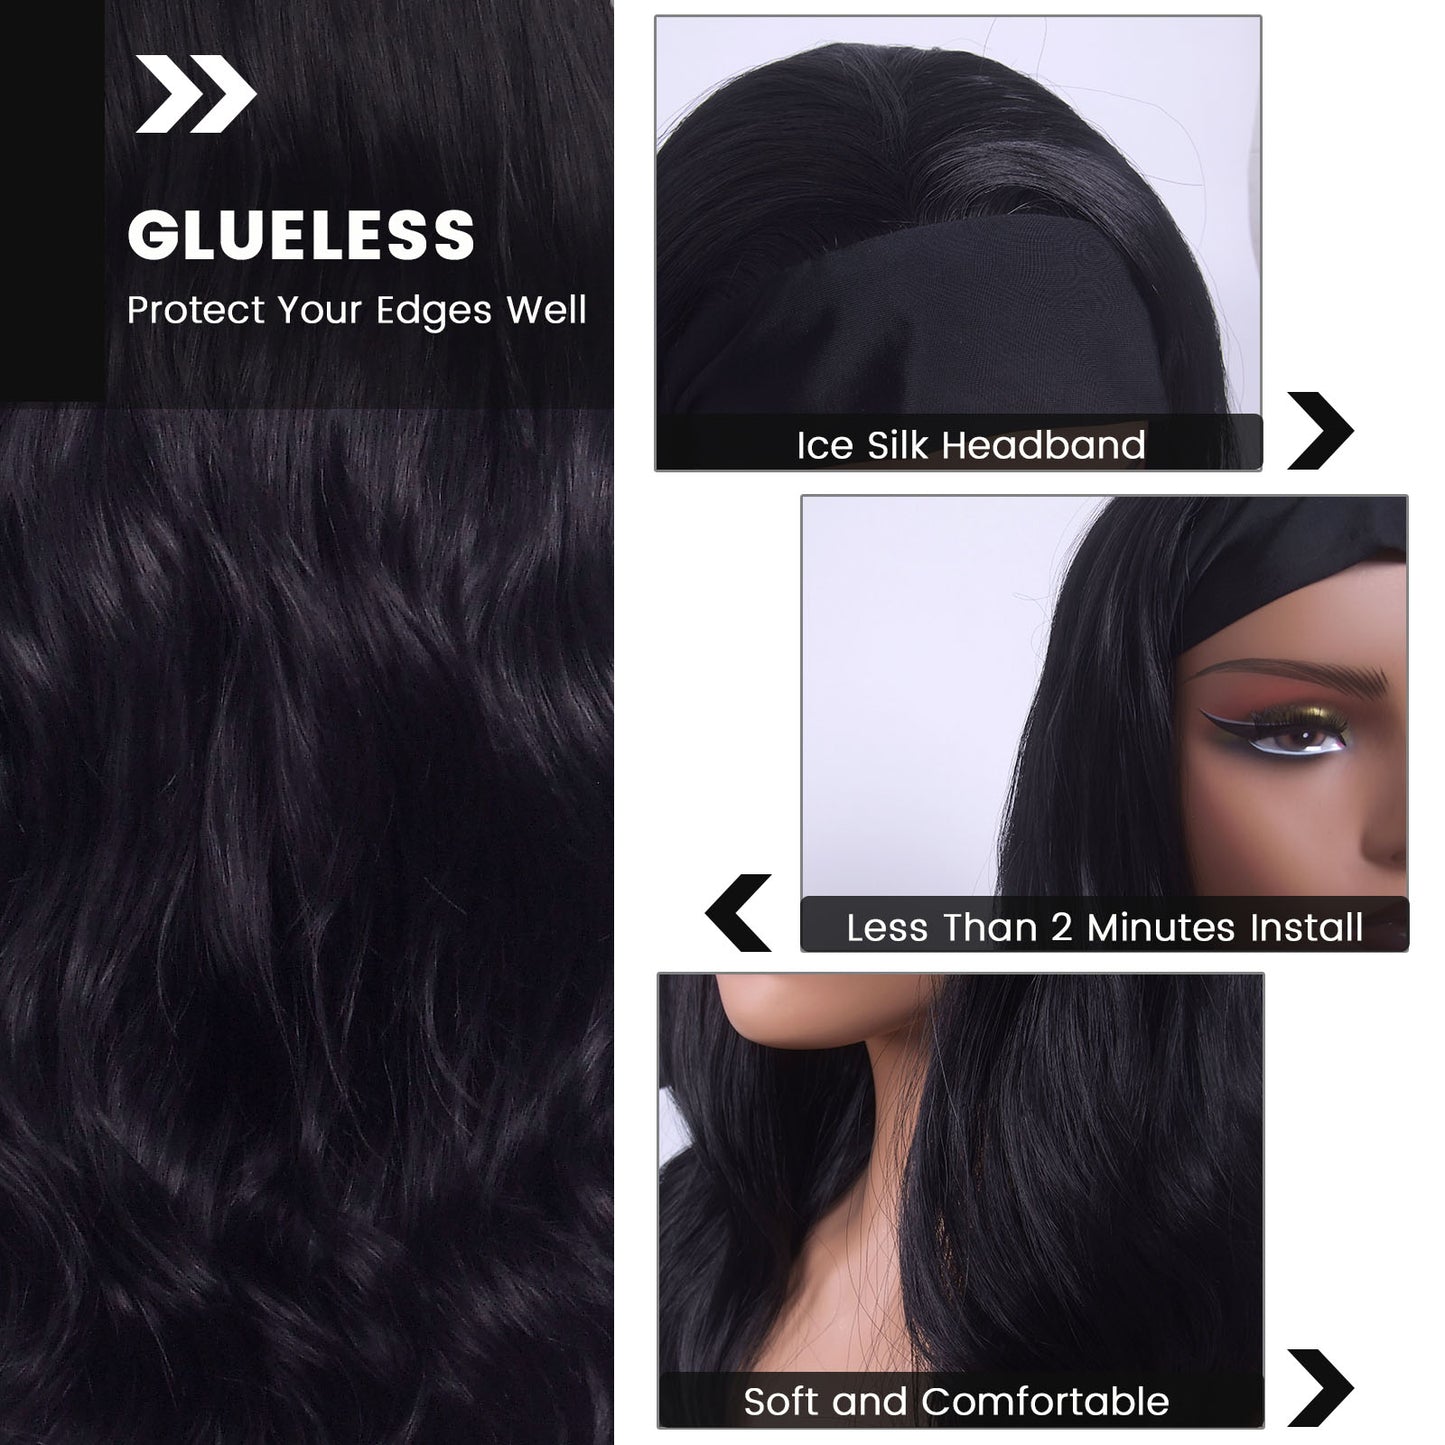 LINGDORA Black Long Curly Wig Headband for Women Synthetic Fashion Wavy Hair Comfortable